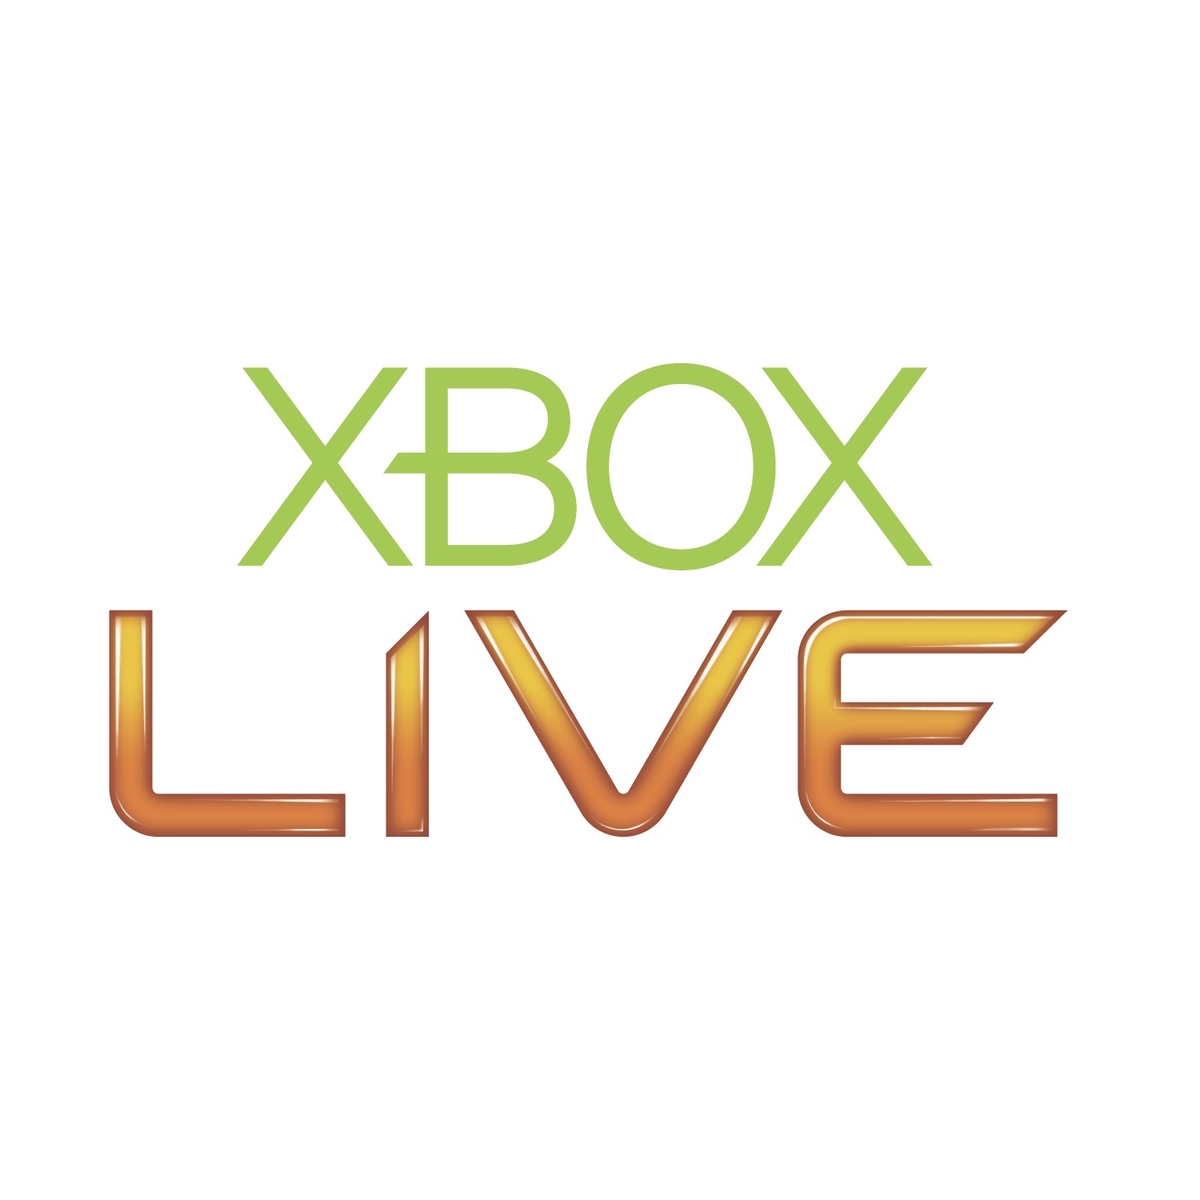 Microsoft Xbox 360 500GB + FIFA 15